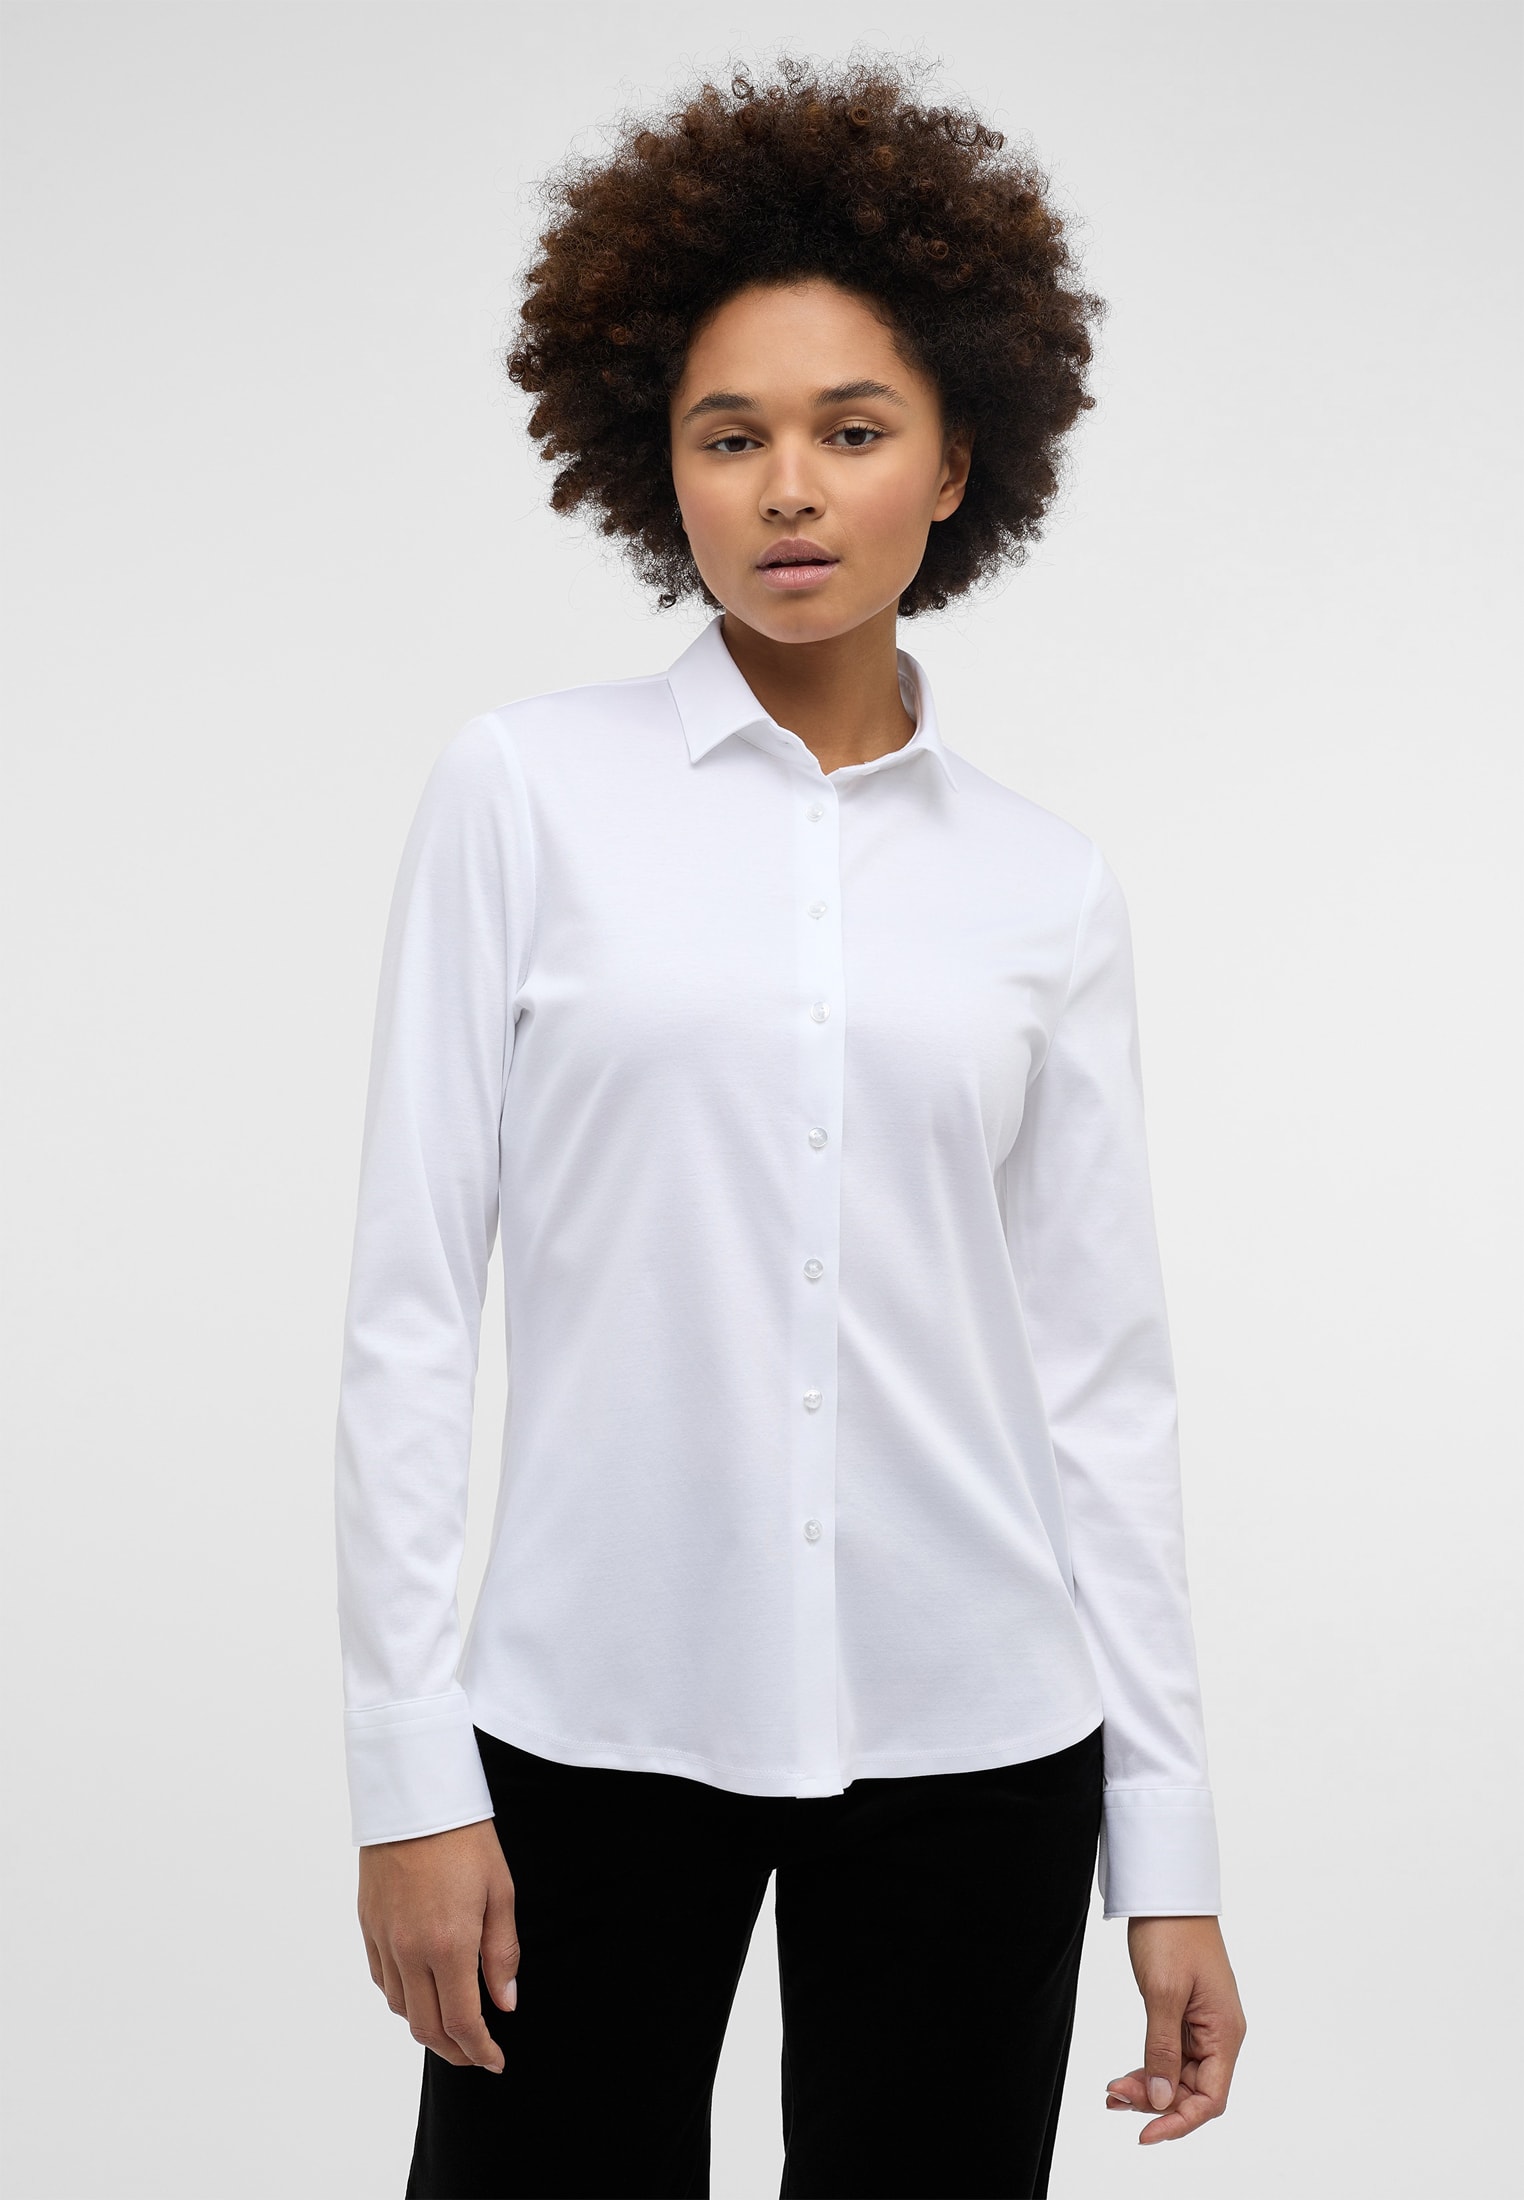 42 long white | Shirt Blouse in | Jersey | plain | sleeve white 2BL00229-00-01-42-1/1